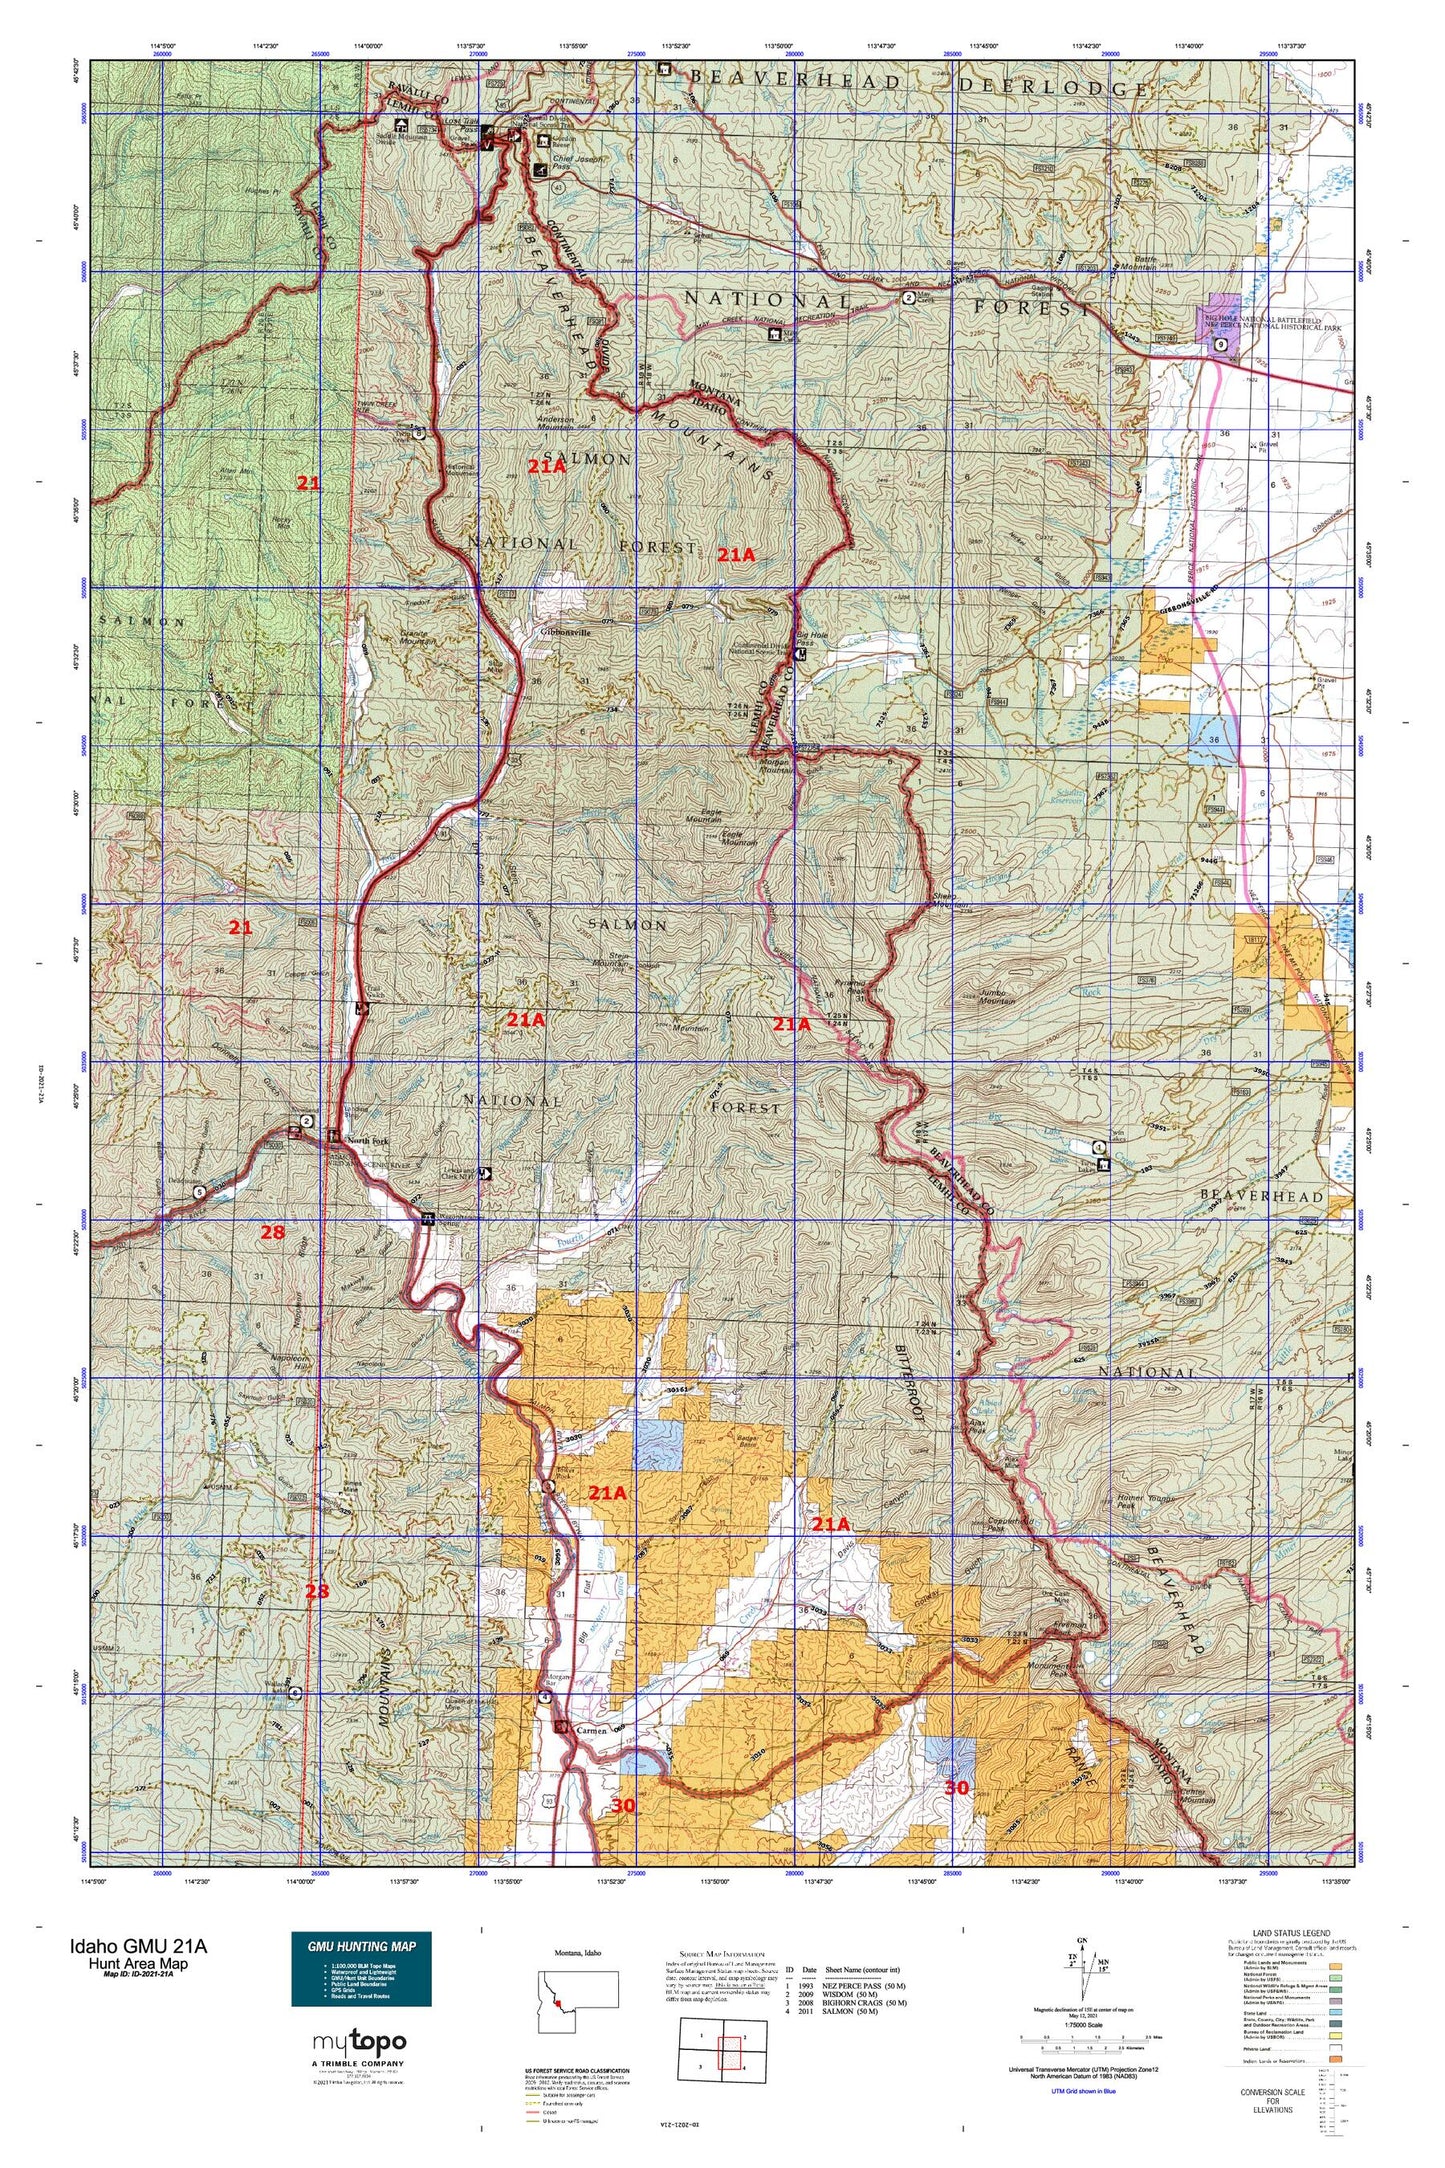 Idaho GMU 21A Map Image